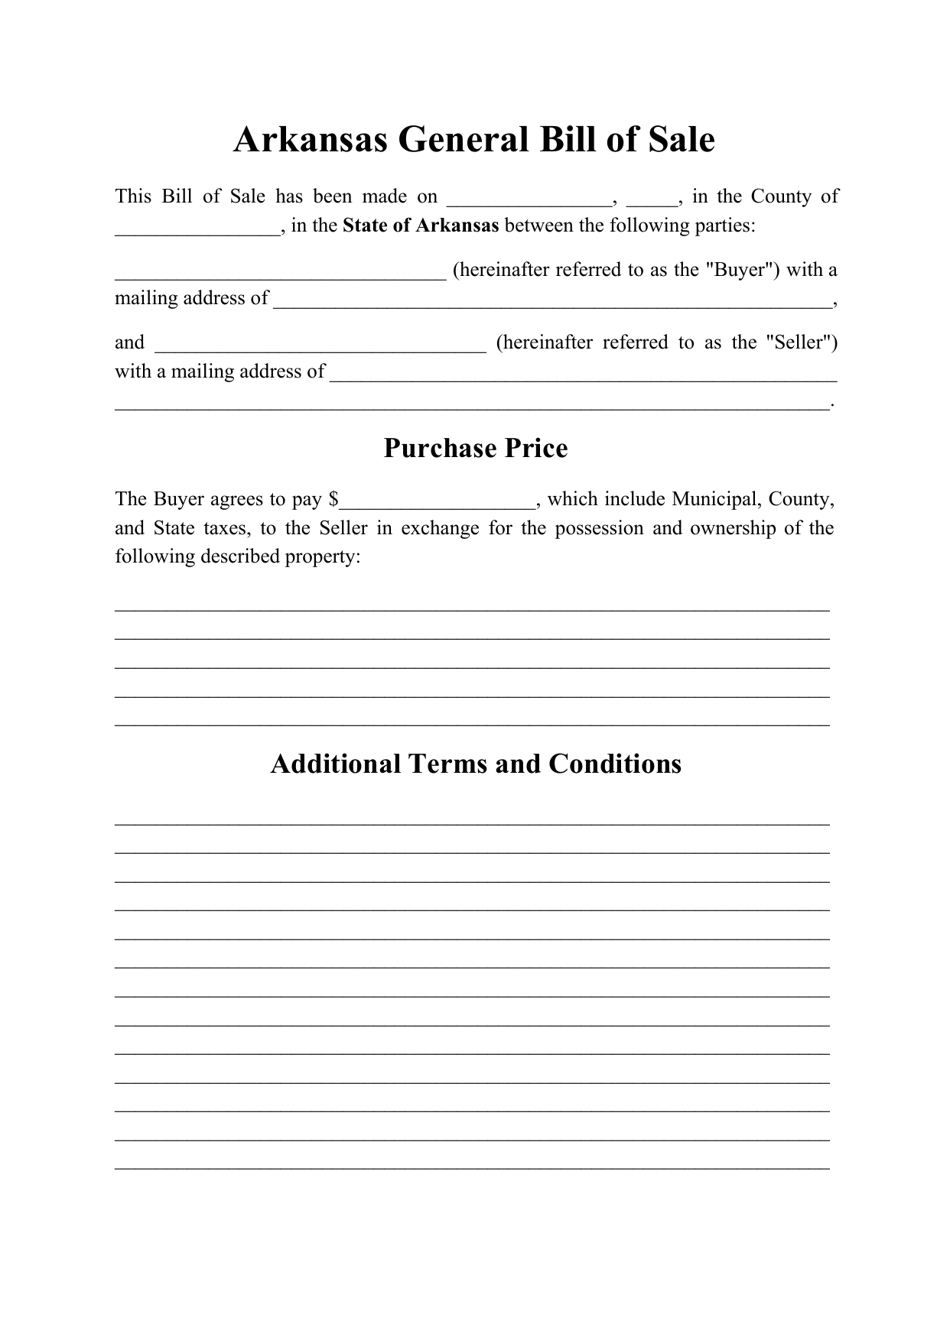 arkansas-generic-bill-of-sale-form-download-printable-pdf-templateroller